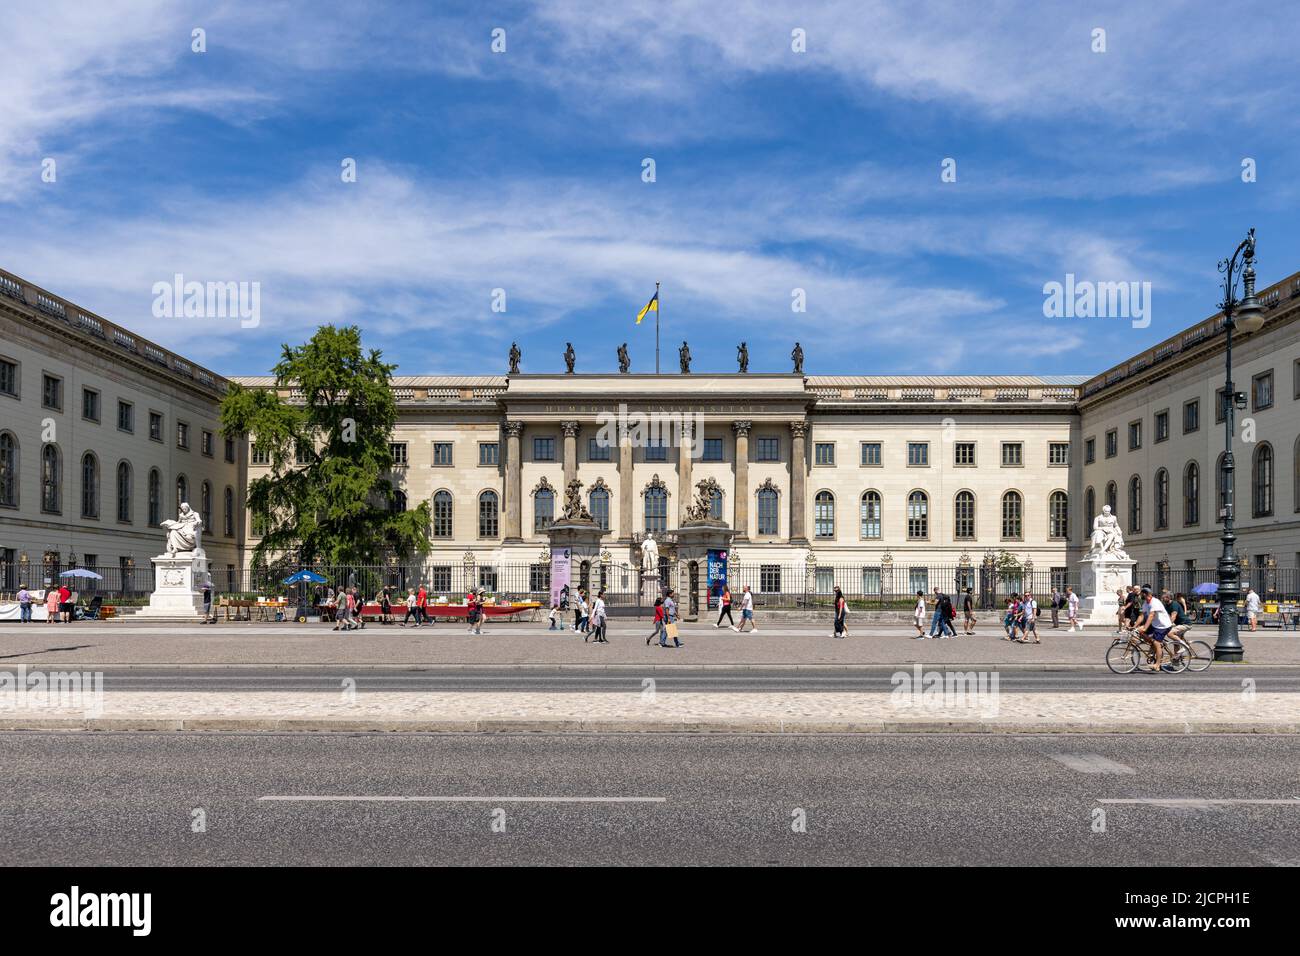 Humboldt university at the boulevard Unter den Linden in Berlin, Germany. Stock Photo